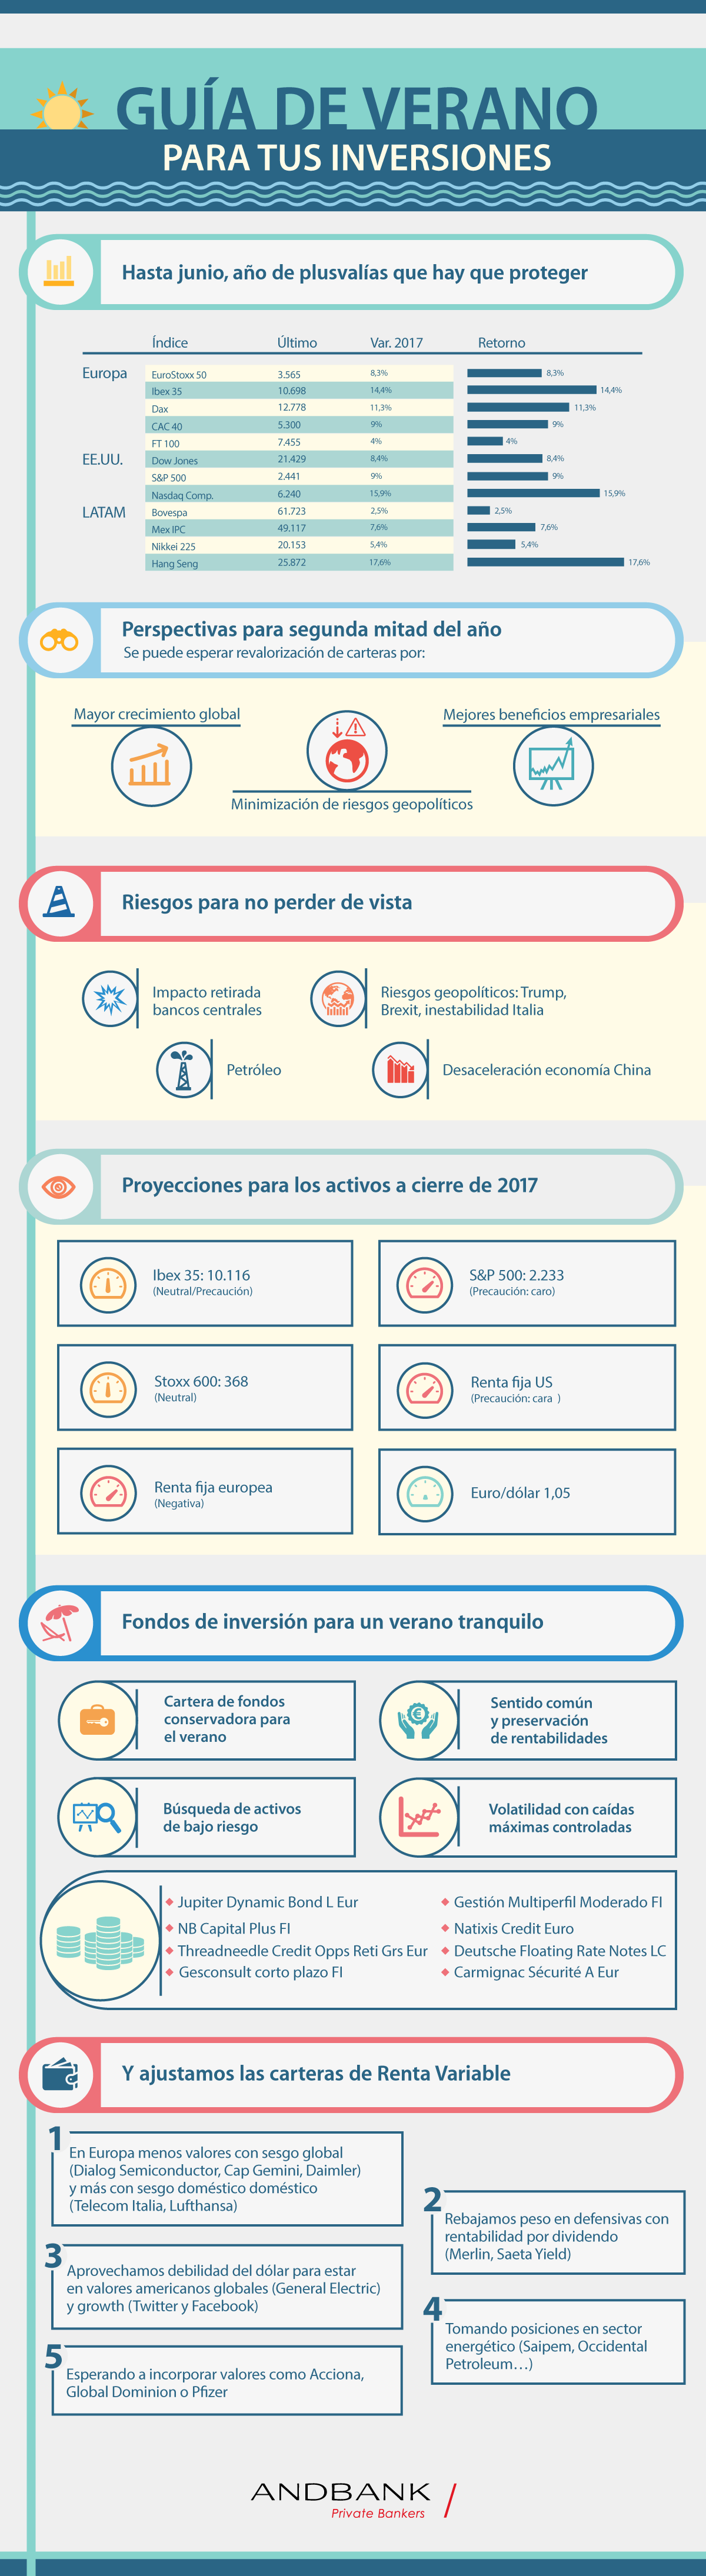 Andbank España infografia inversion en verano